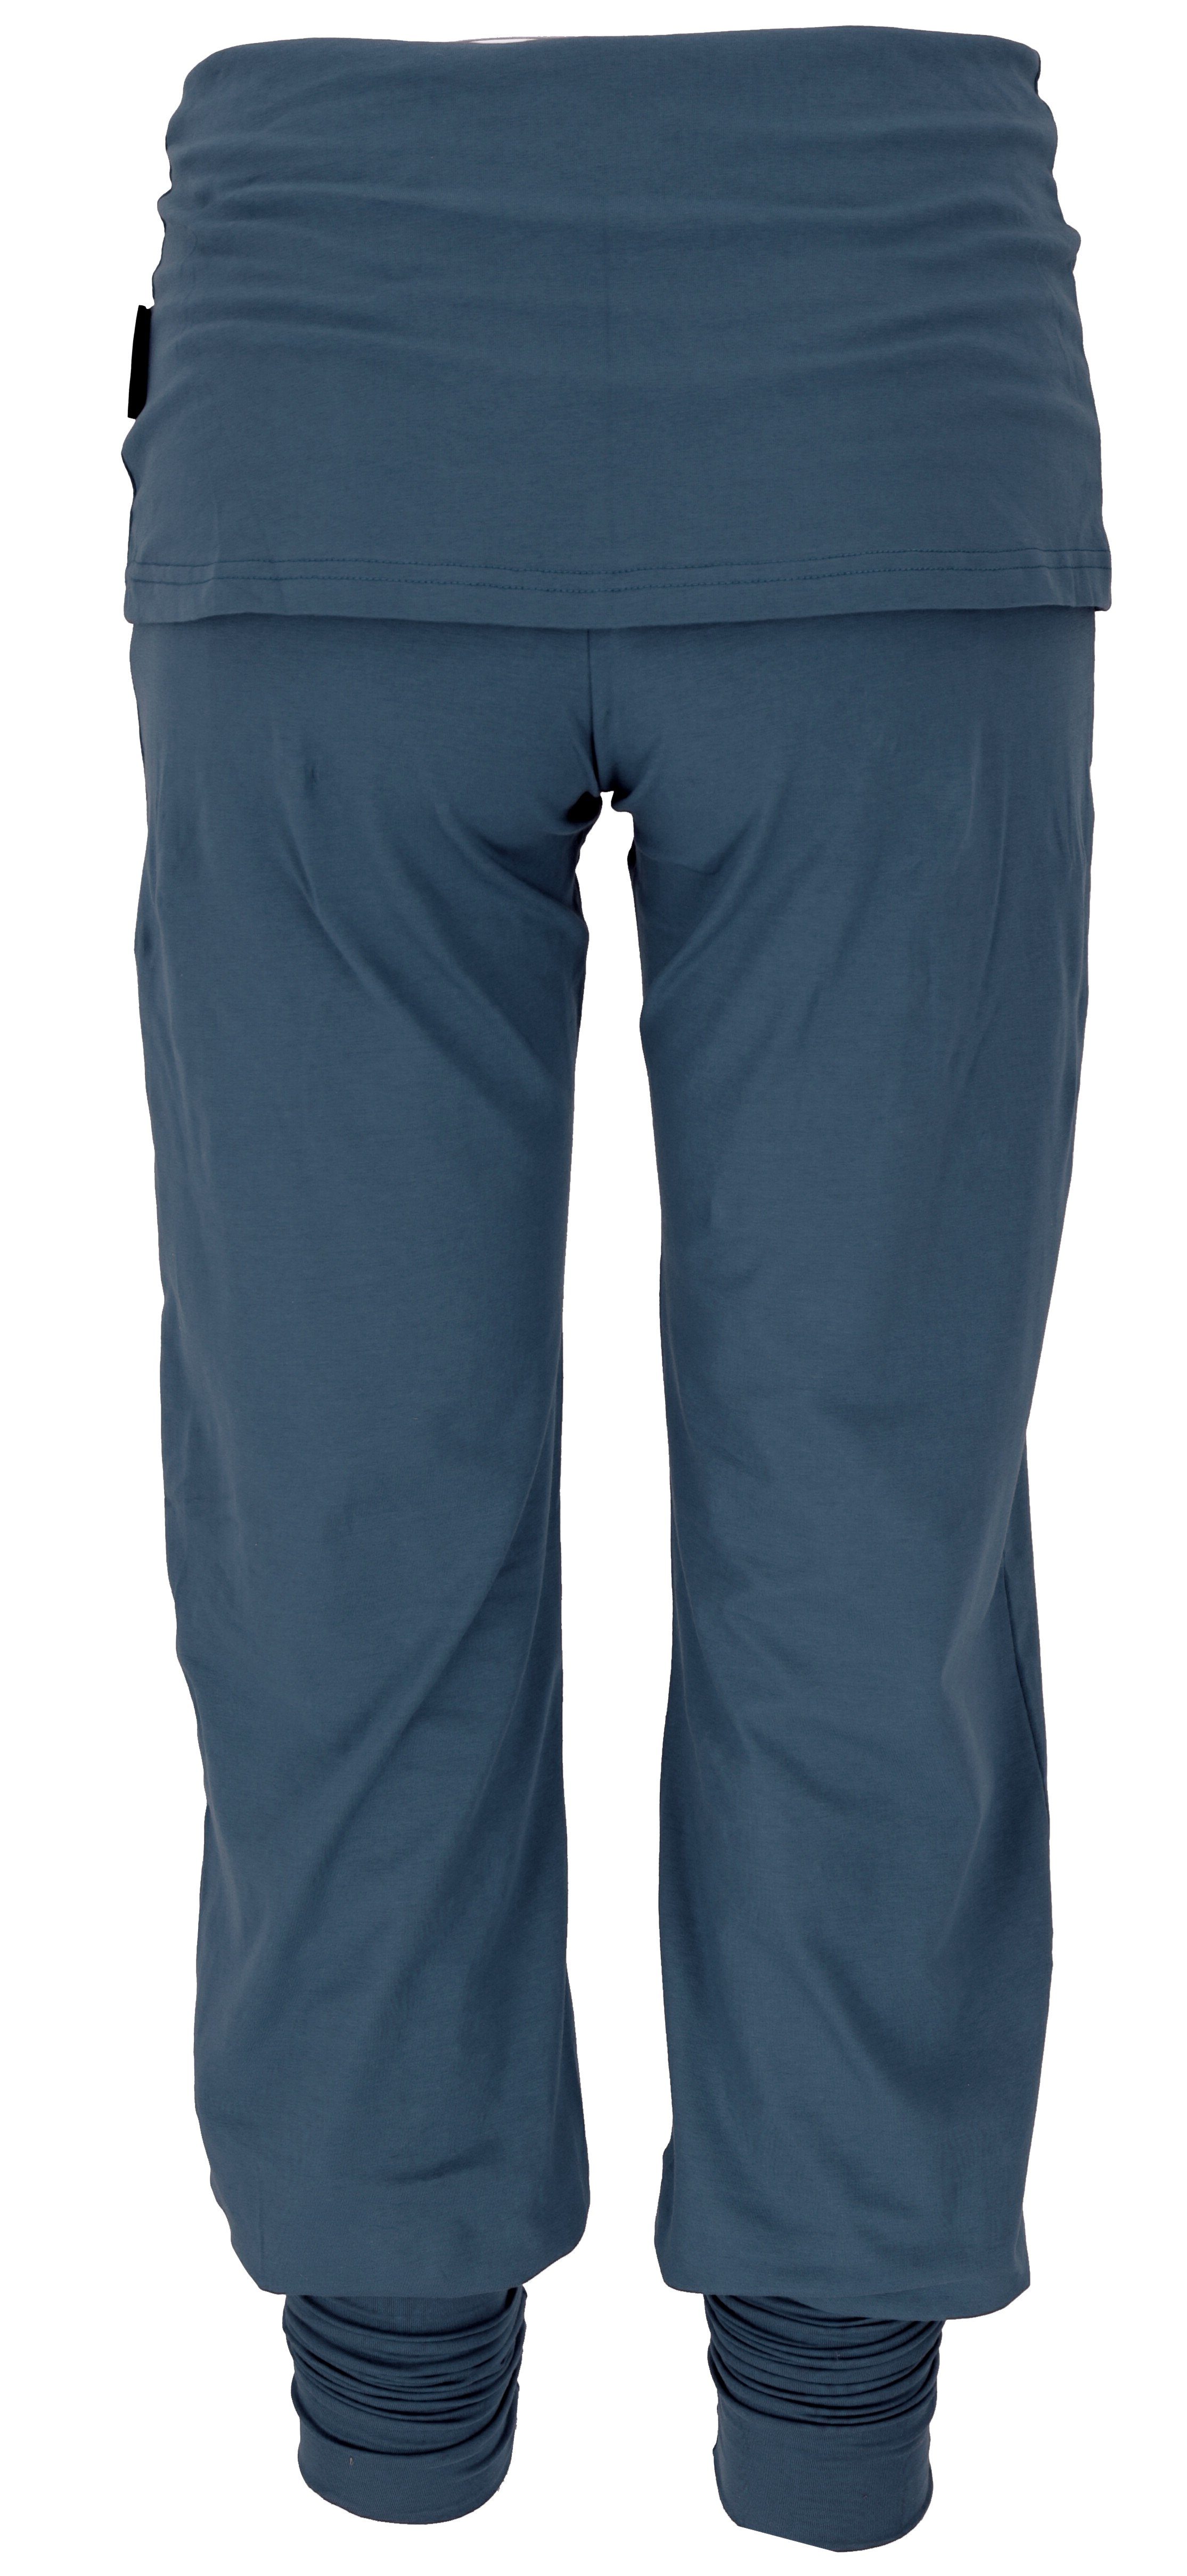 Guru-Shop Relaxhose Yoga-Hose mit Minirock orion blau alternative in - Bio-Qualität Bekleidung orion